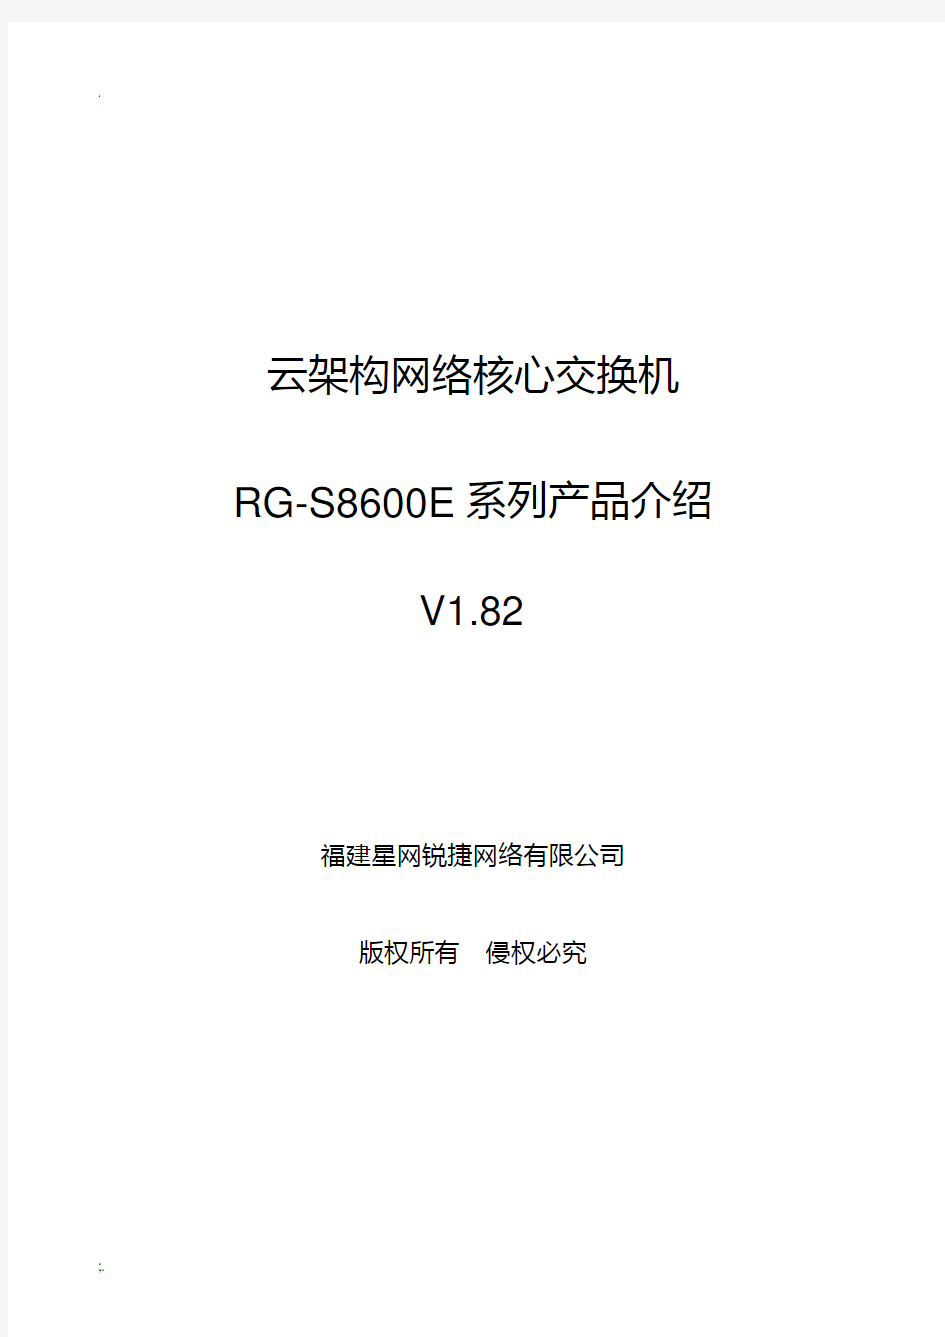 RG-S8600E云架构网络核心交换机产品介绍(V1.82)